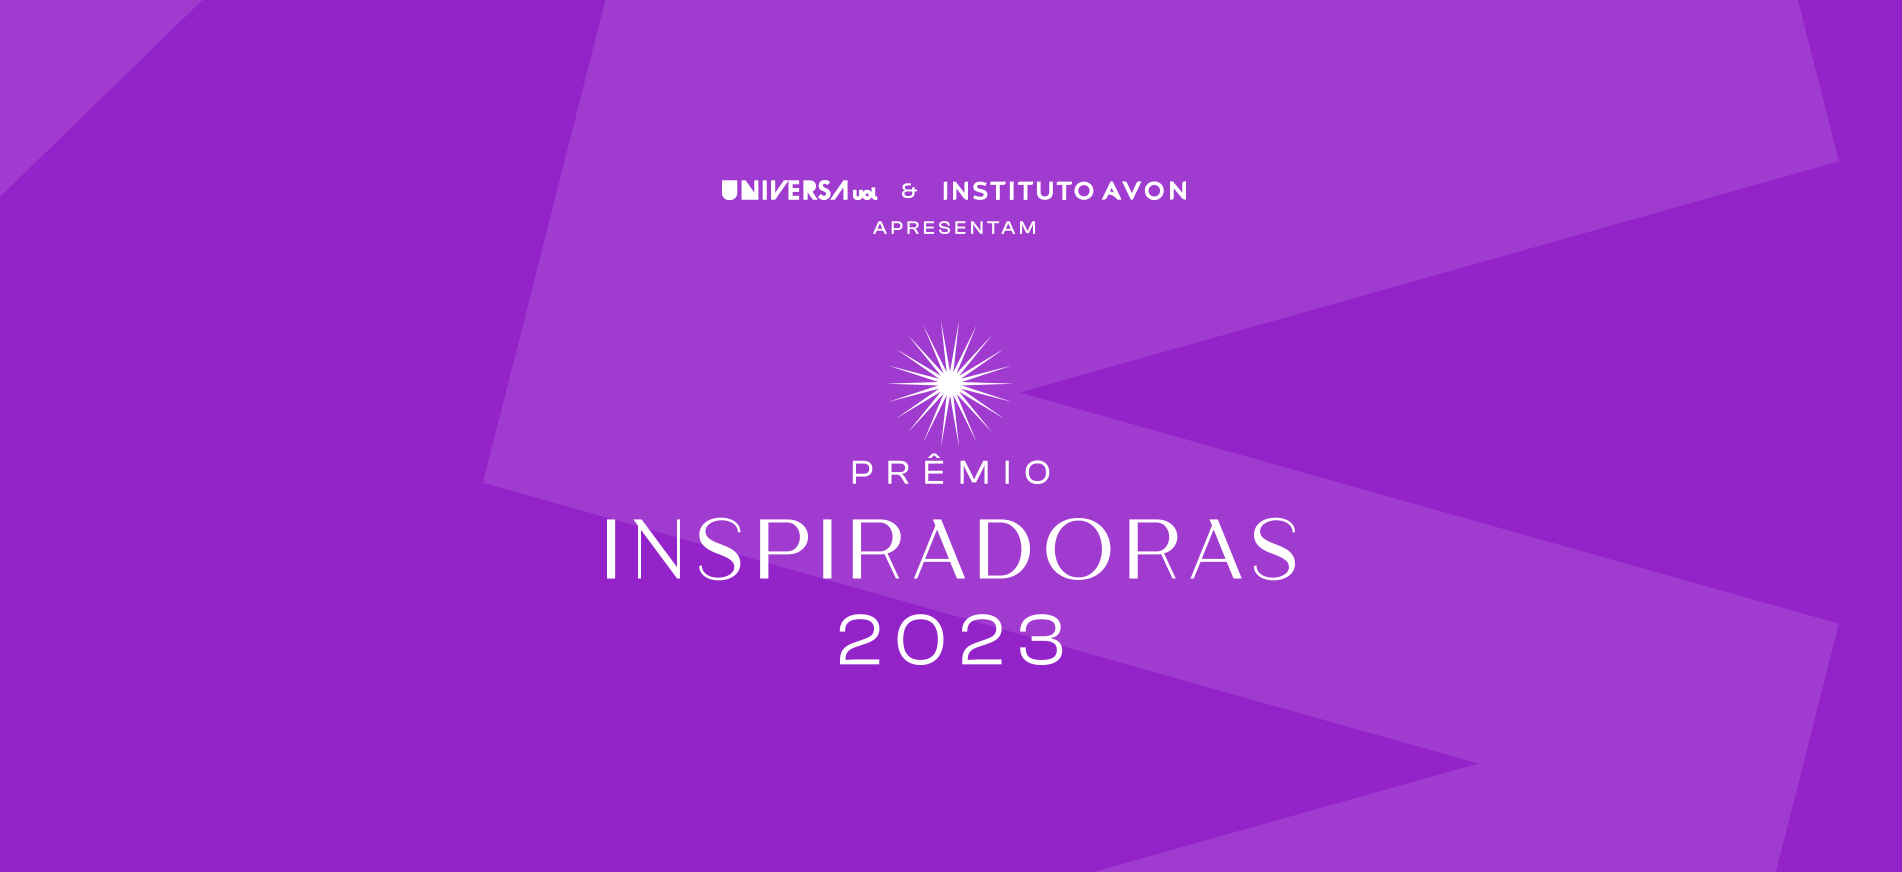 Prêmio Inspiradoras - Universa & Instituto Avon